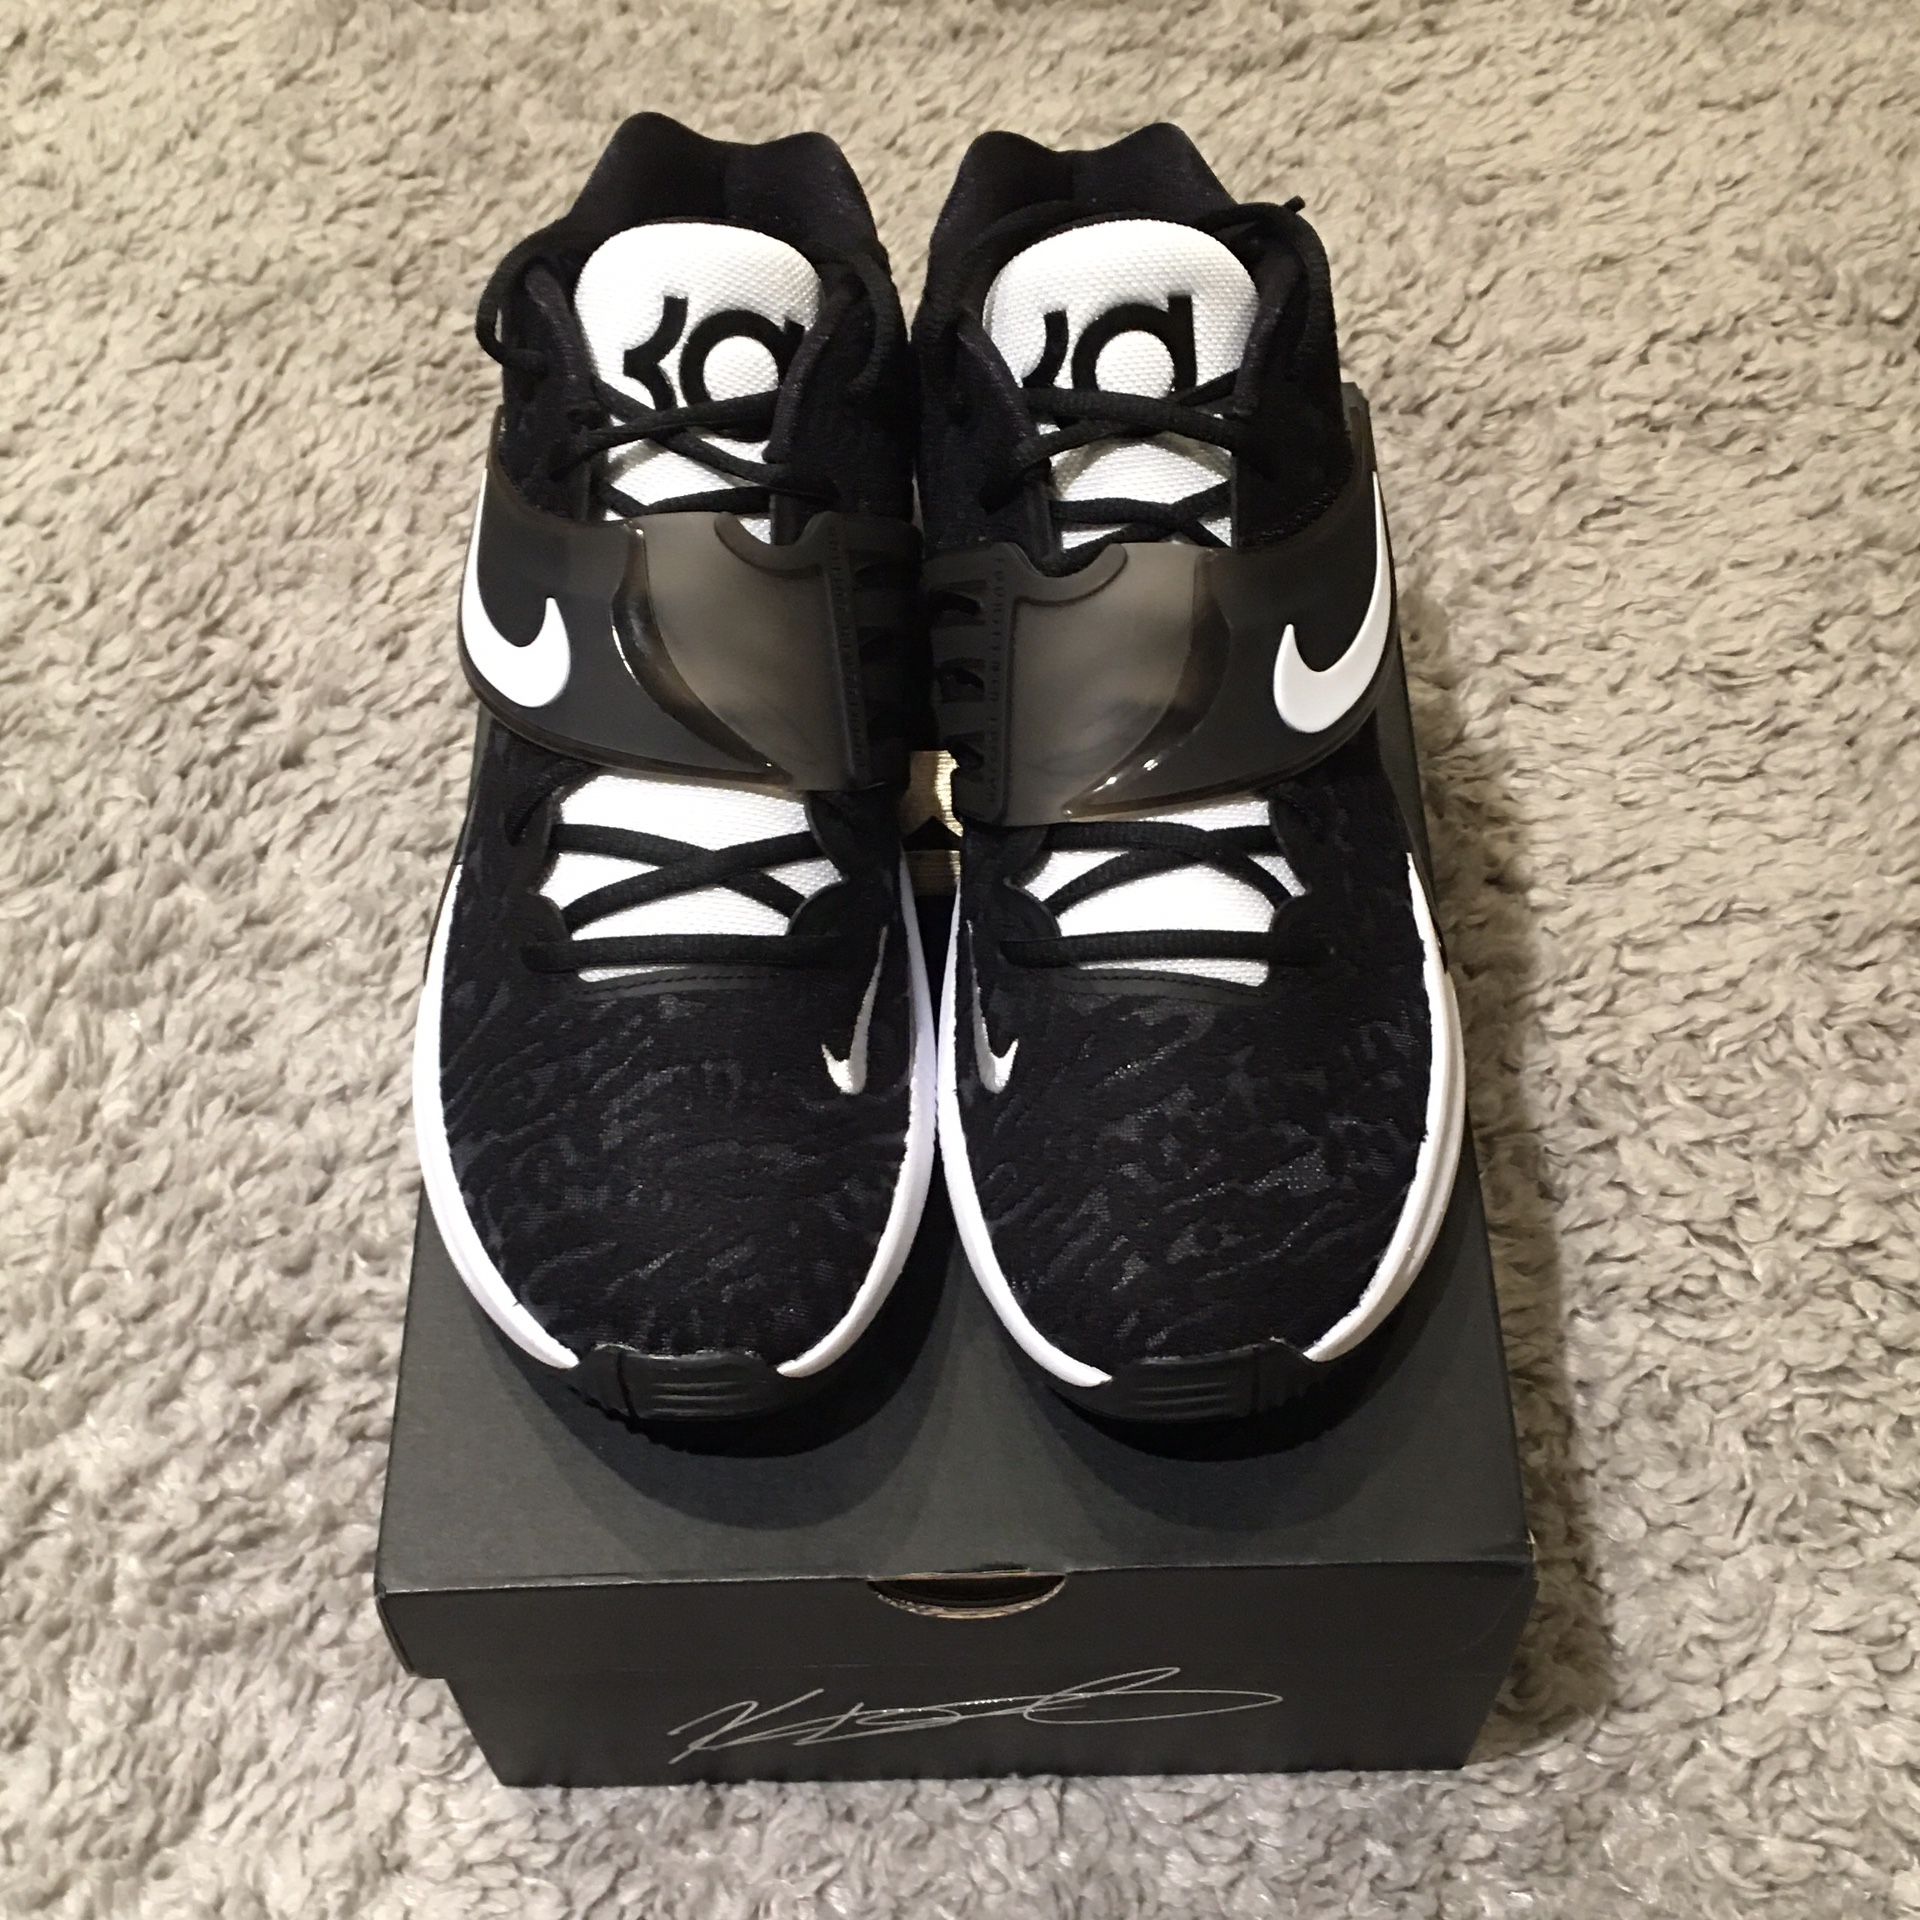 Nike KD14 TB Promo Black/White Men’s Basketball Shoes Sizes 10.5, 11 DM5040-001